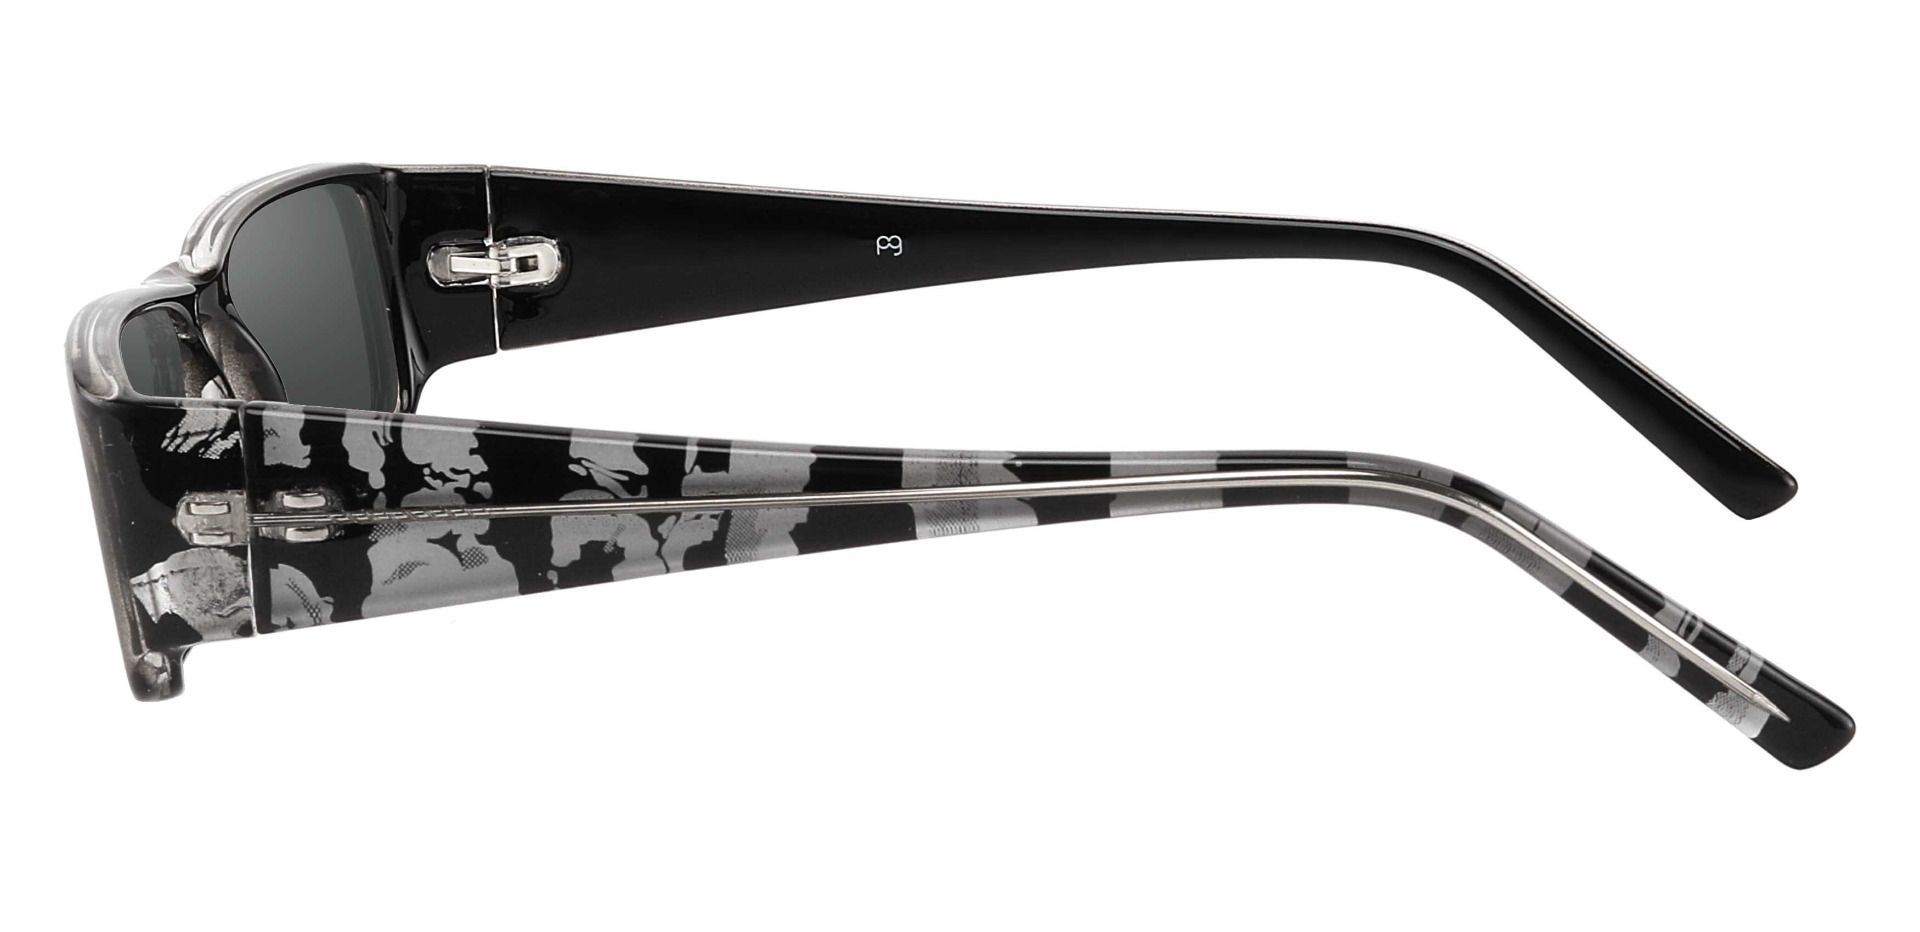 Elbert Rectangle Single Vision Sunglasses - Black Frame With Gray Lenses